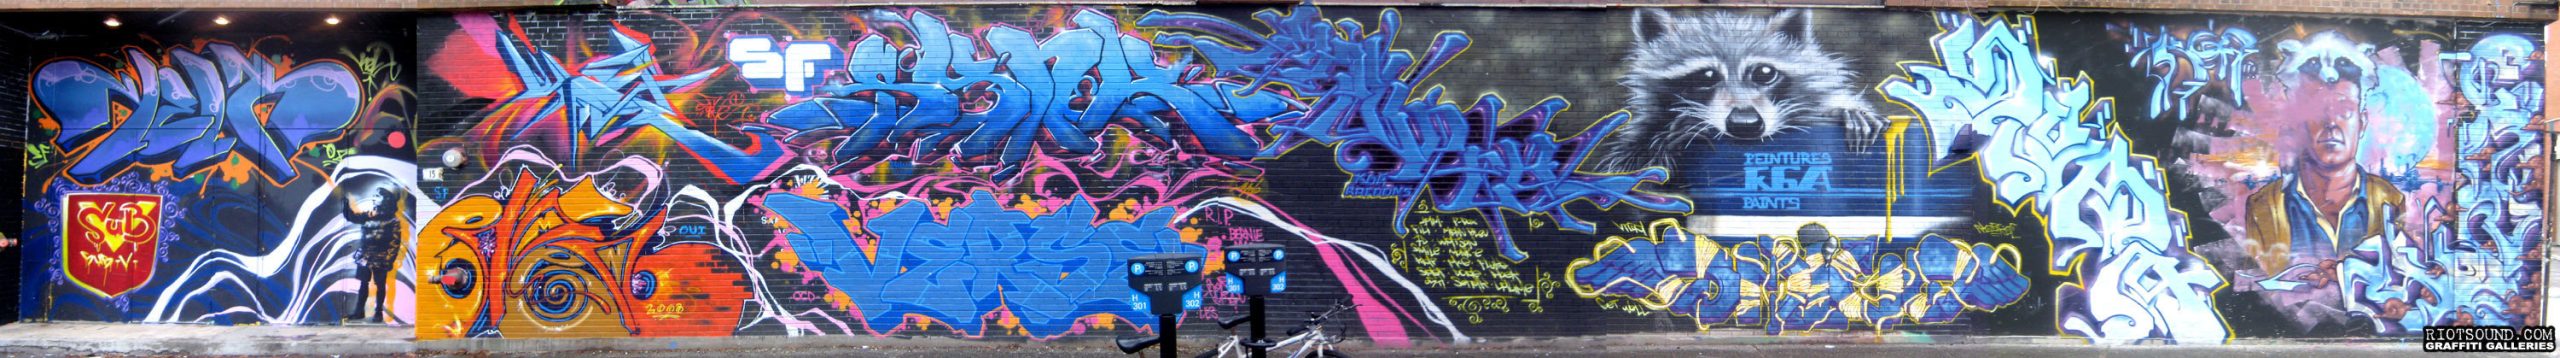 KBA Graffiti Canada